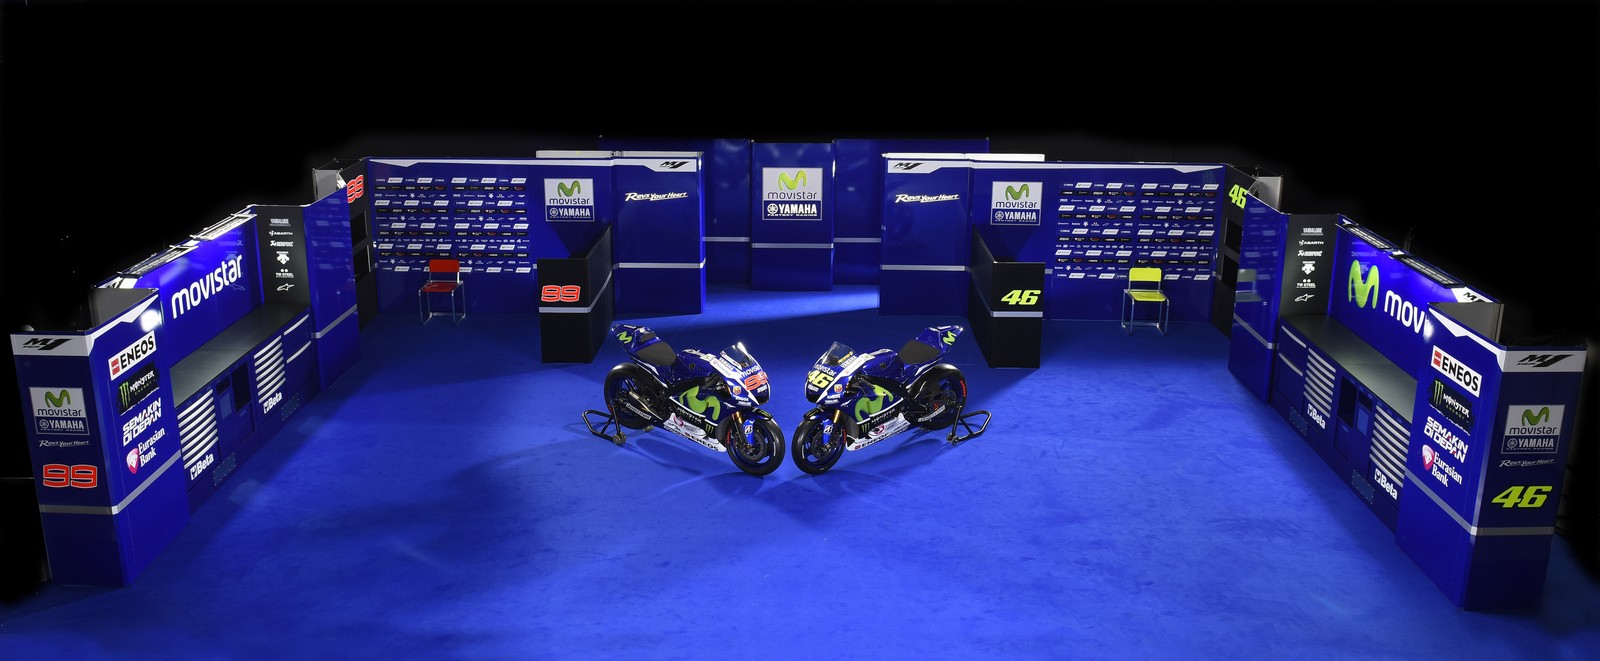 Rossi Yamaha 2015